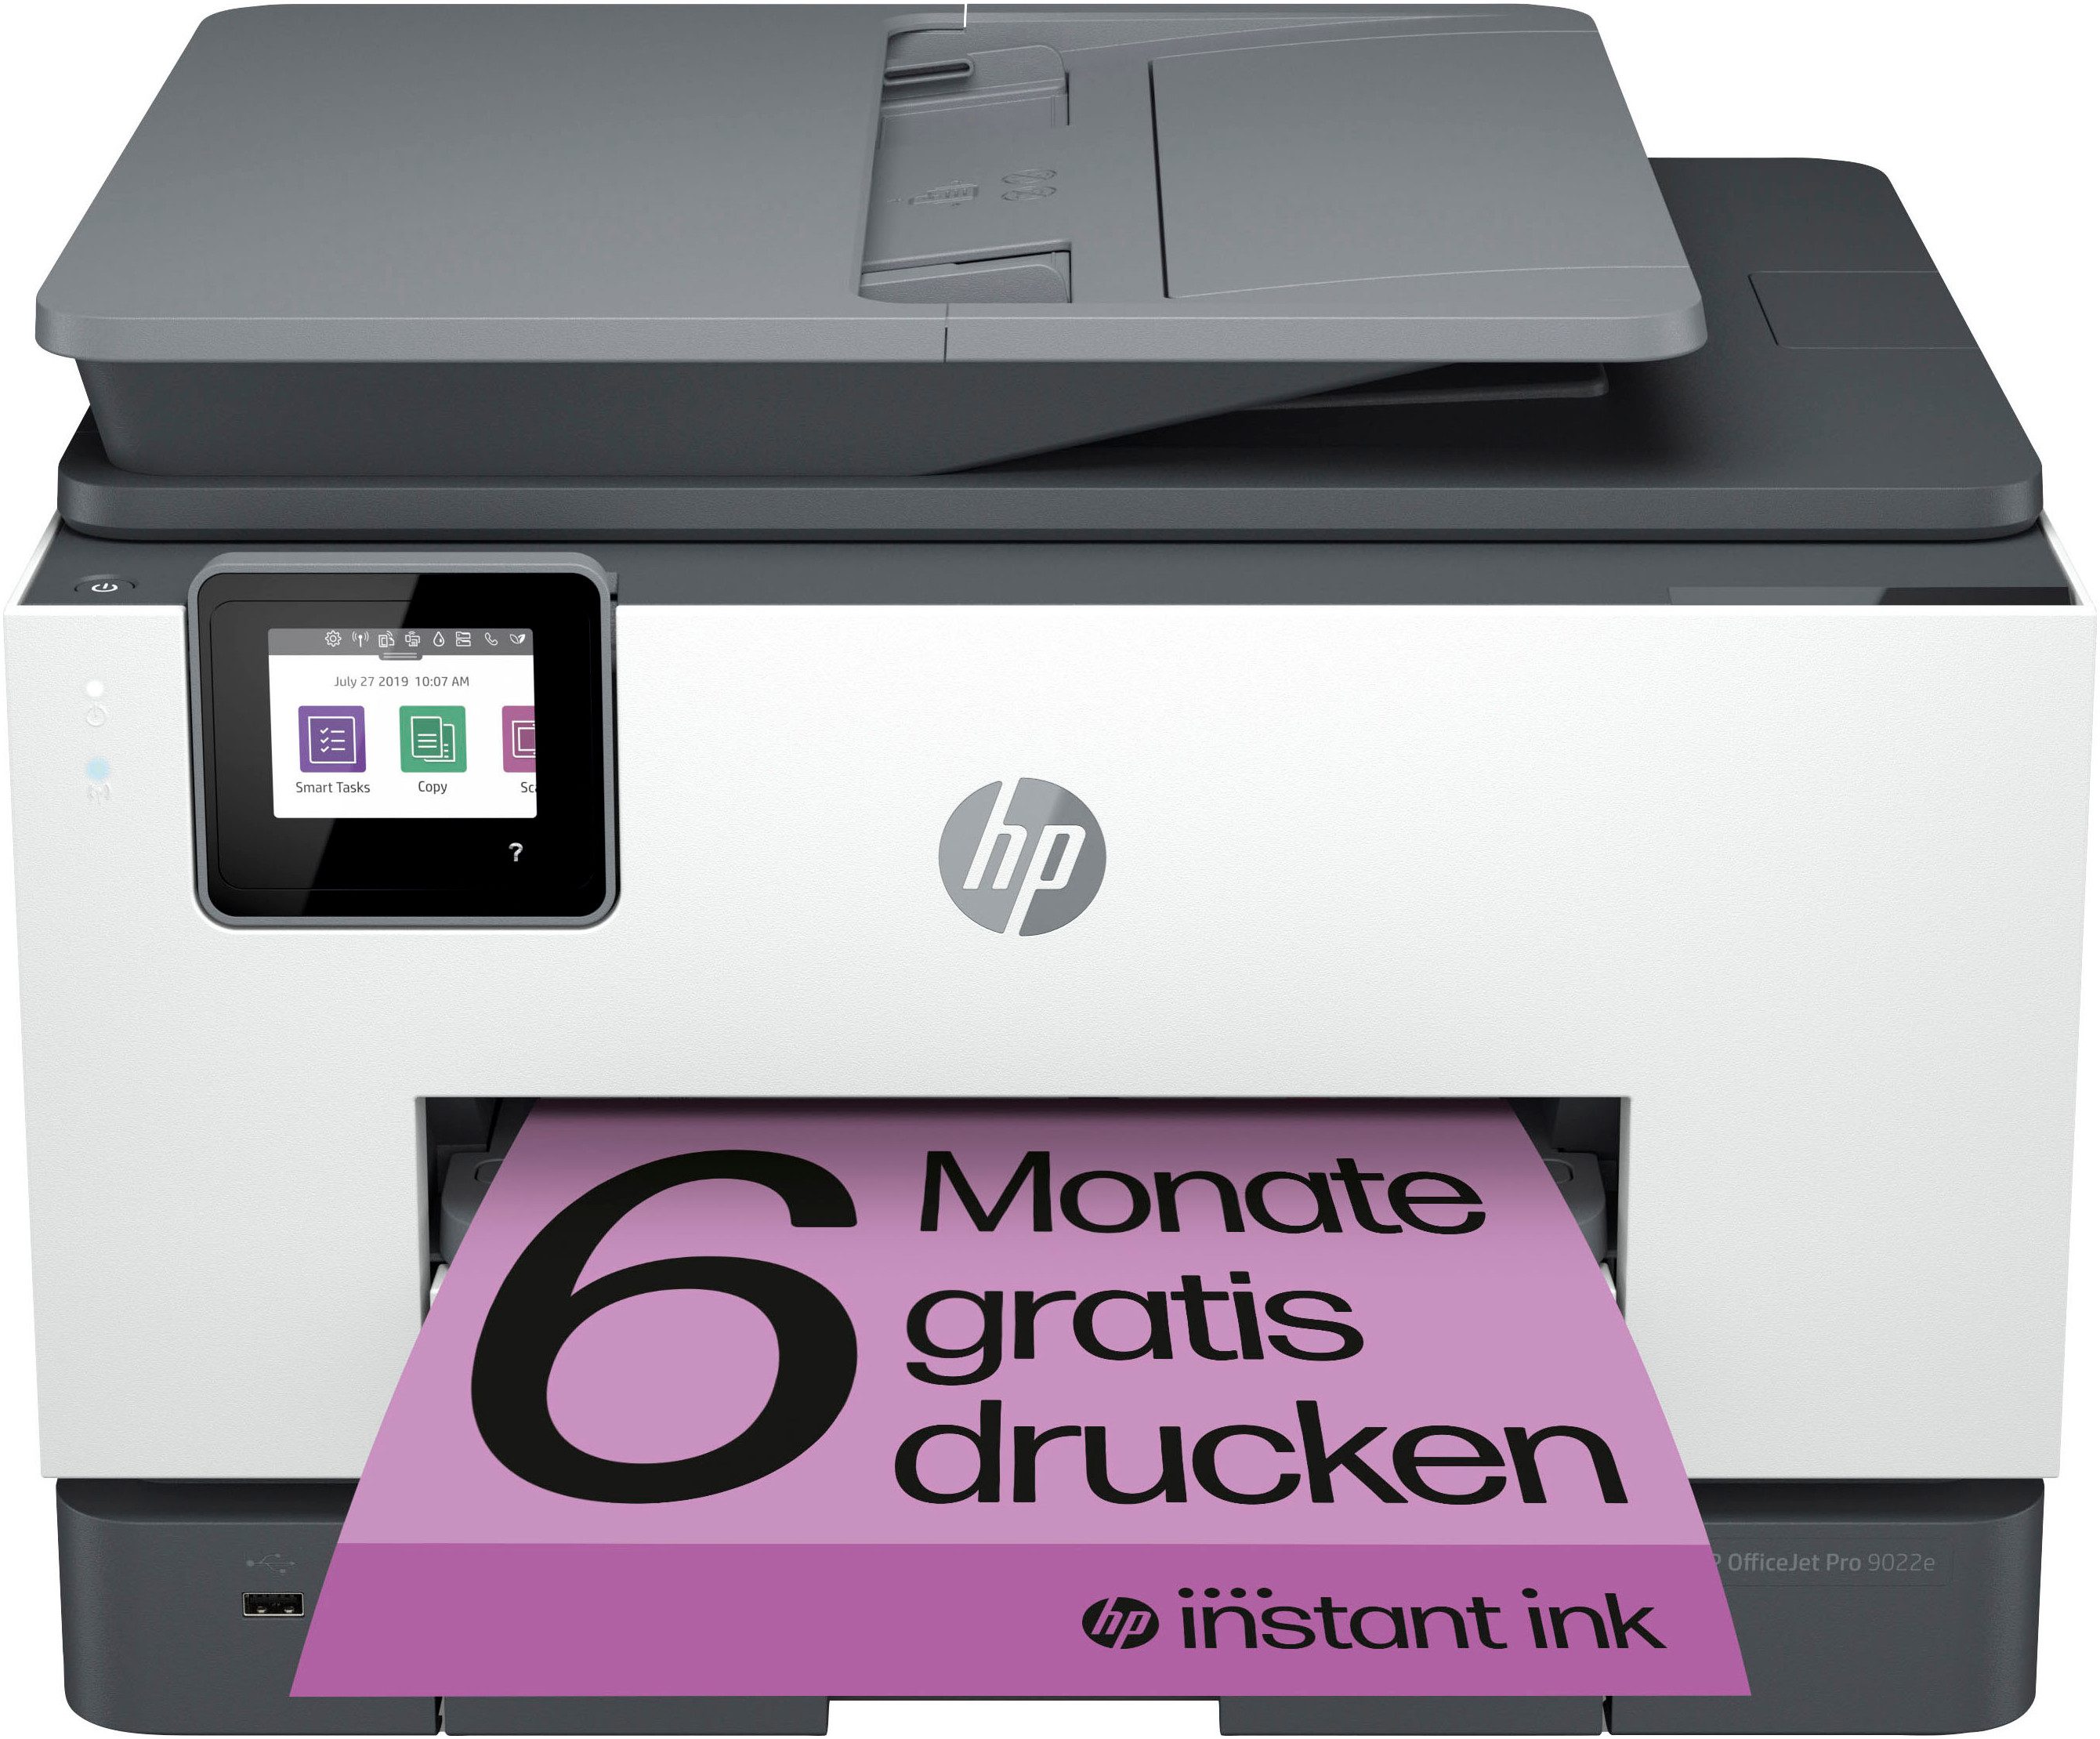 HP OfficeJet Pro 9022e Багатофункціональний принтер, (LAN (Ethernet), WLAN (Wi-Fi), 6 Monate gratis Drucken mit HP Instant Ink inklusive)